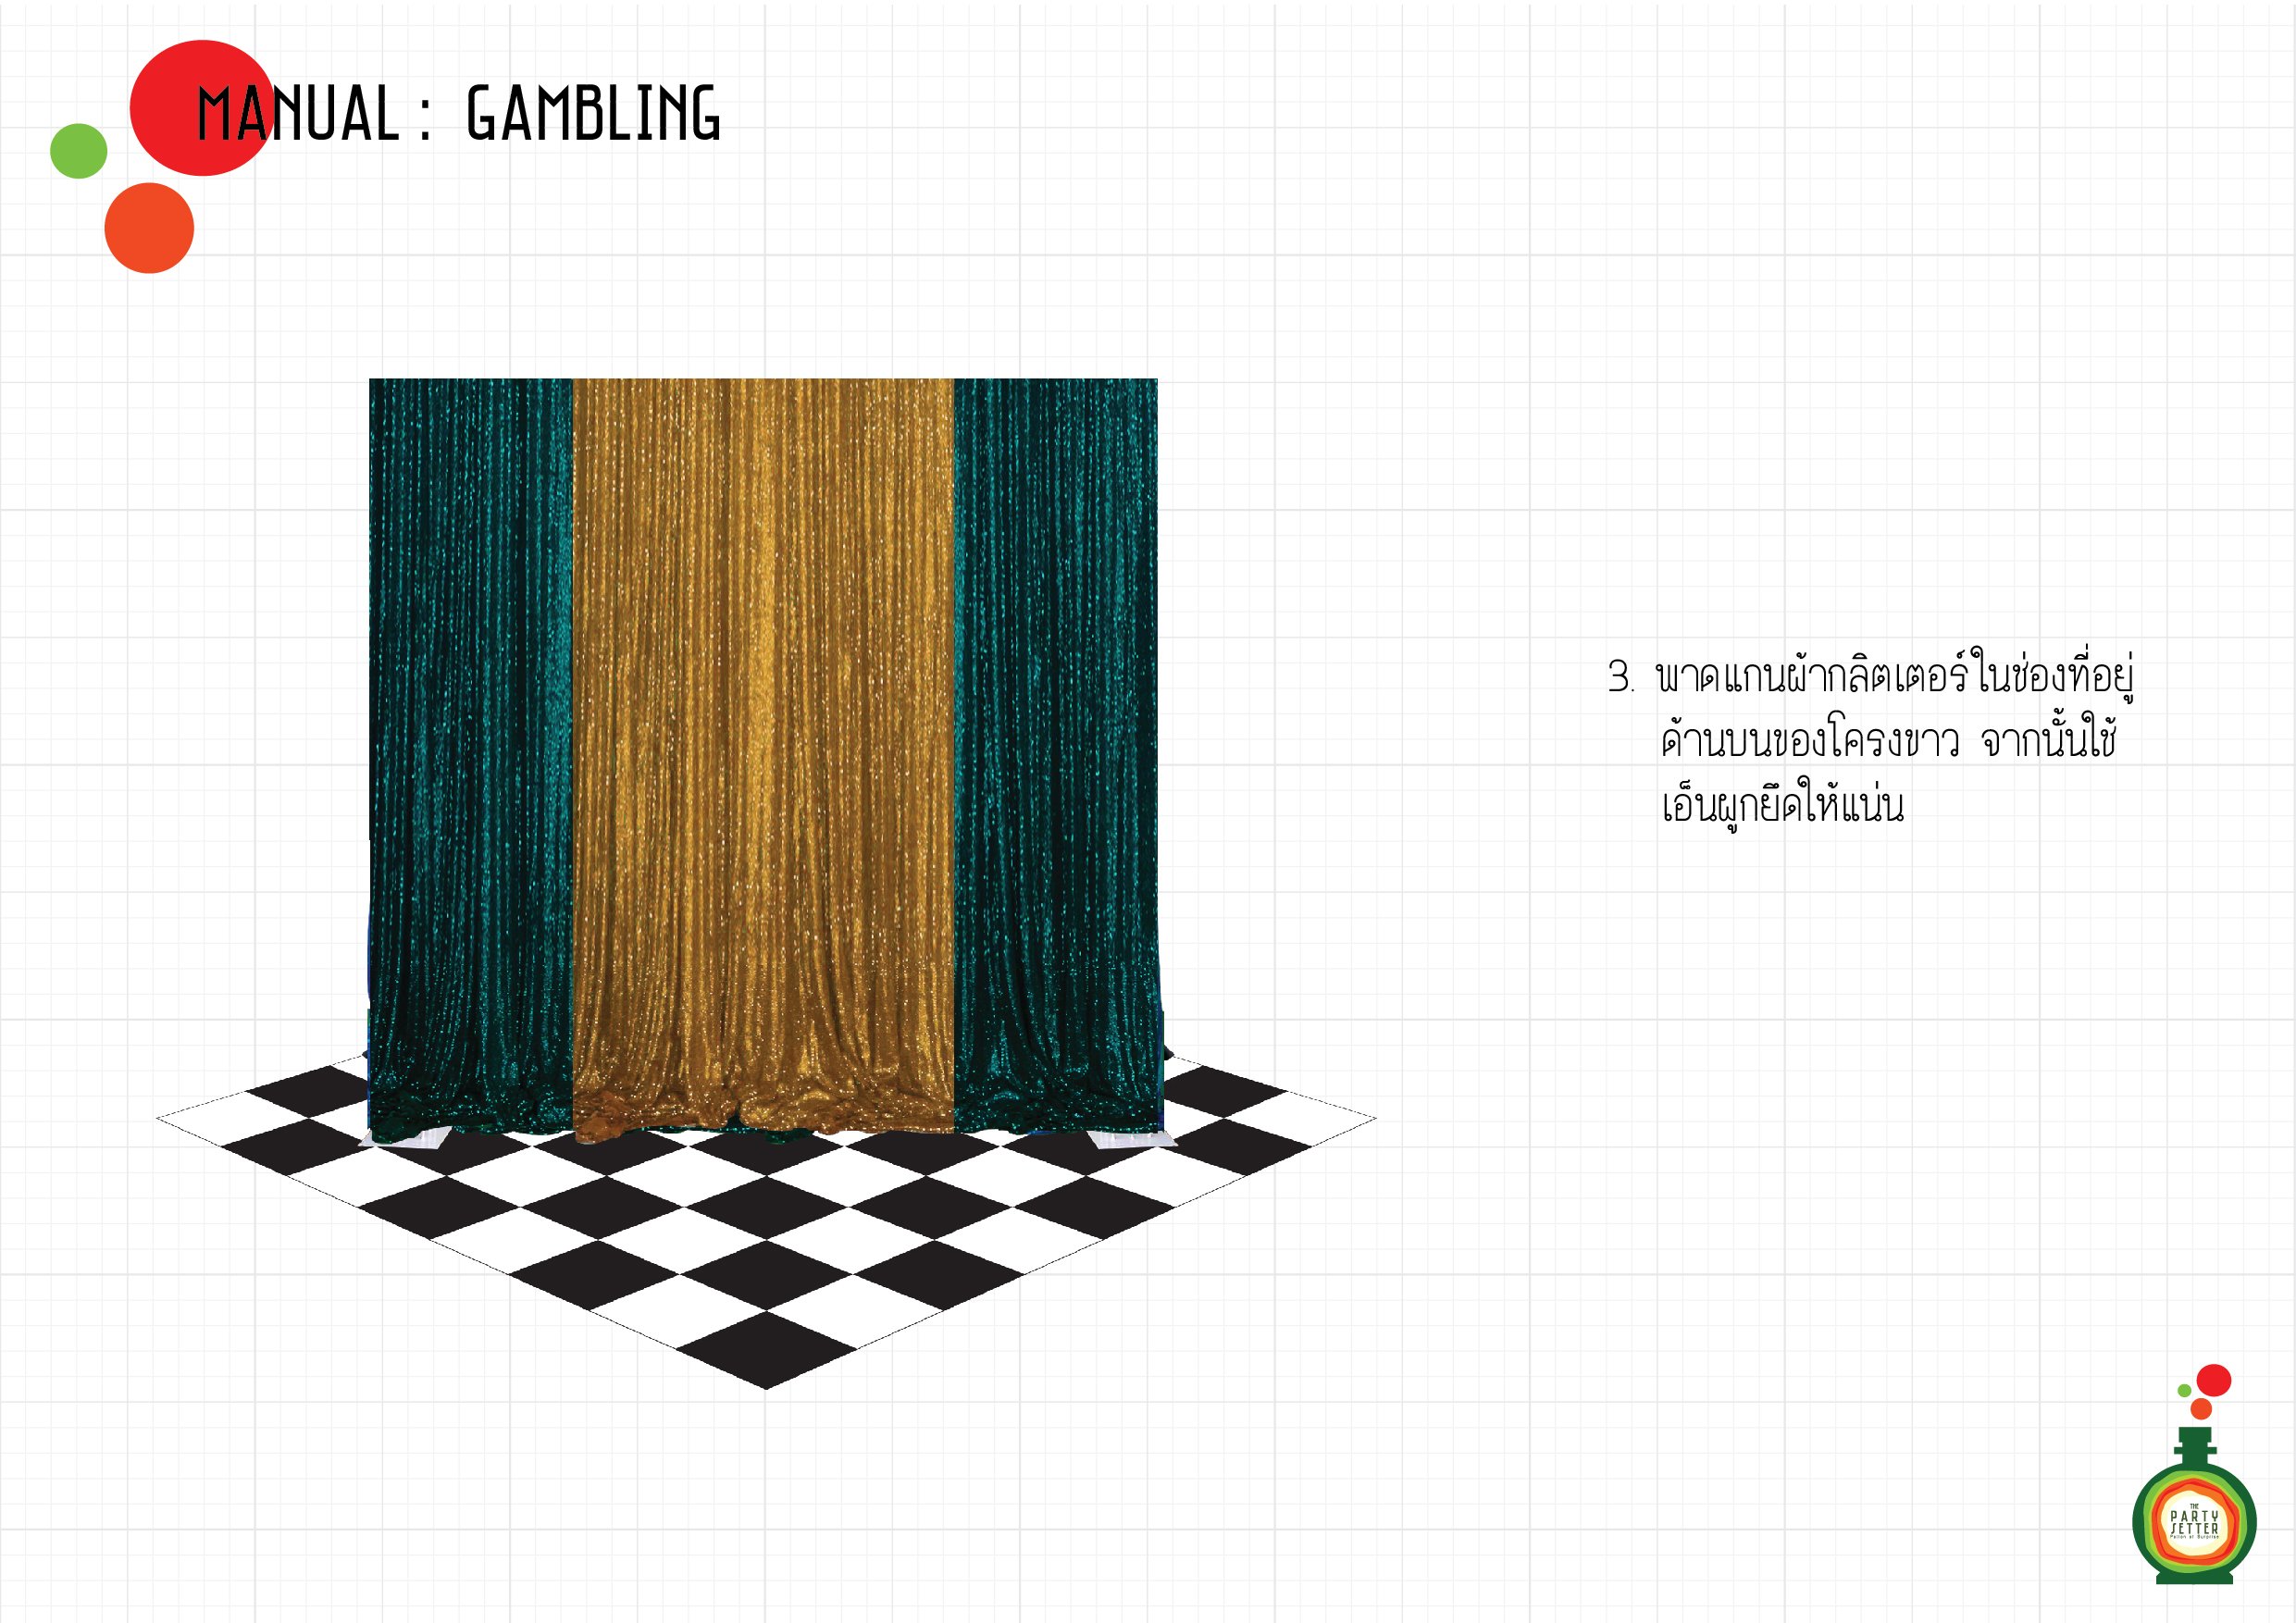 Manual_Gambling-03-01.jpg